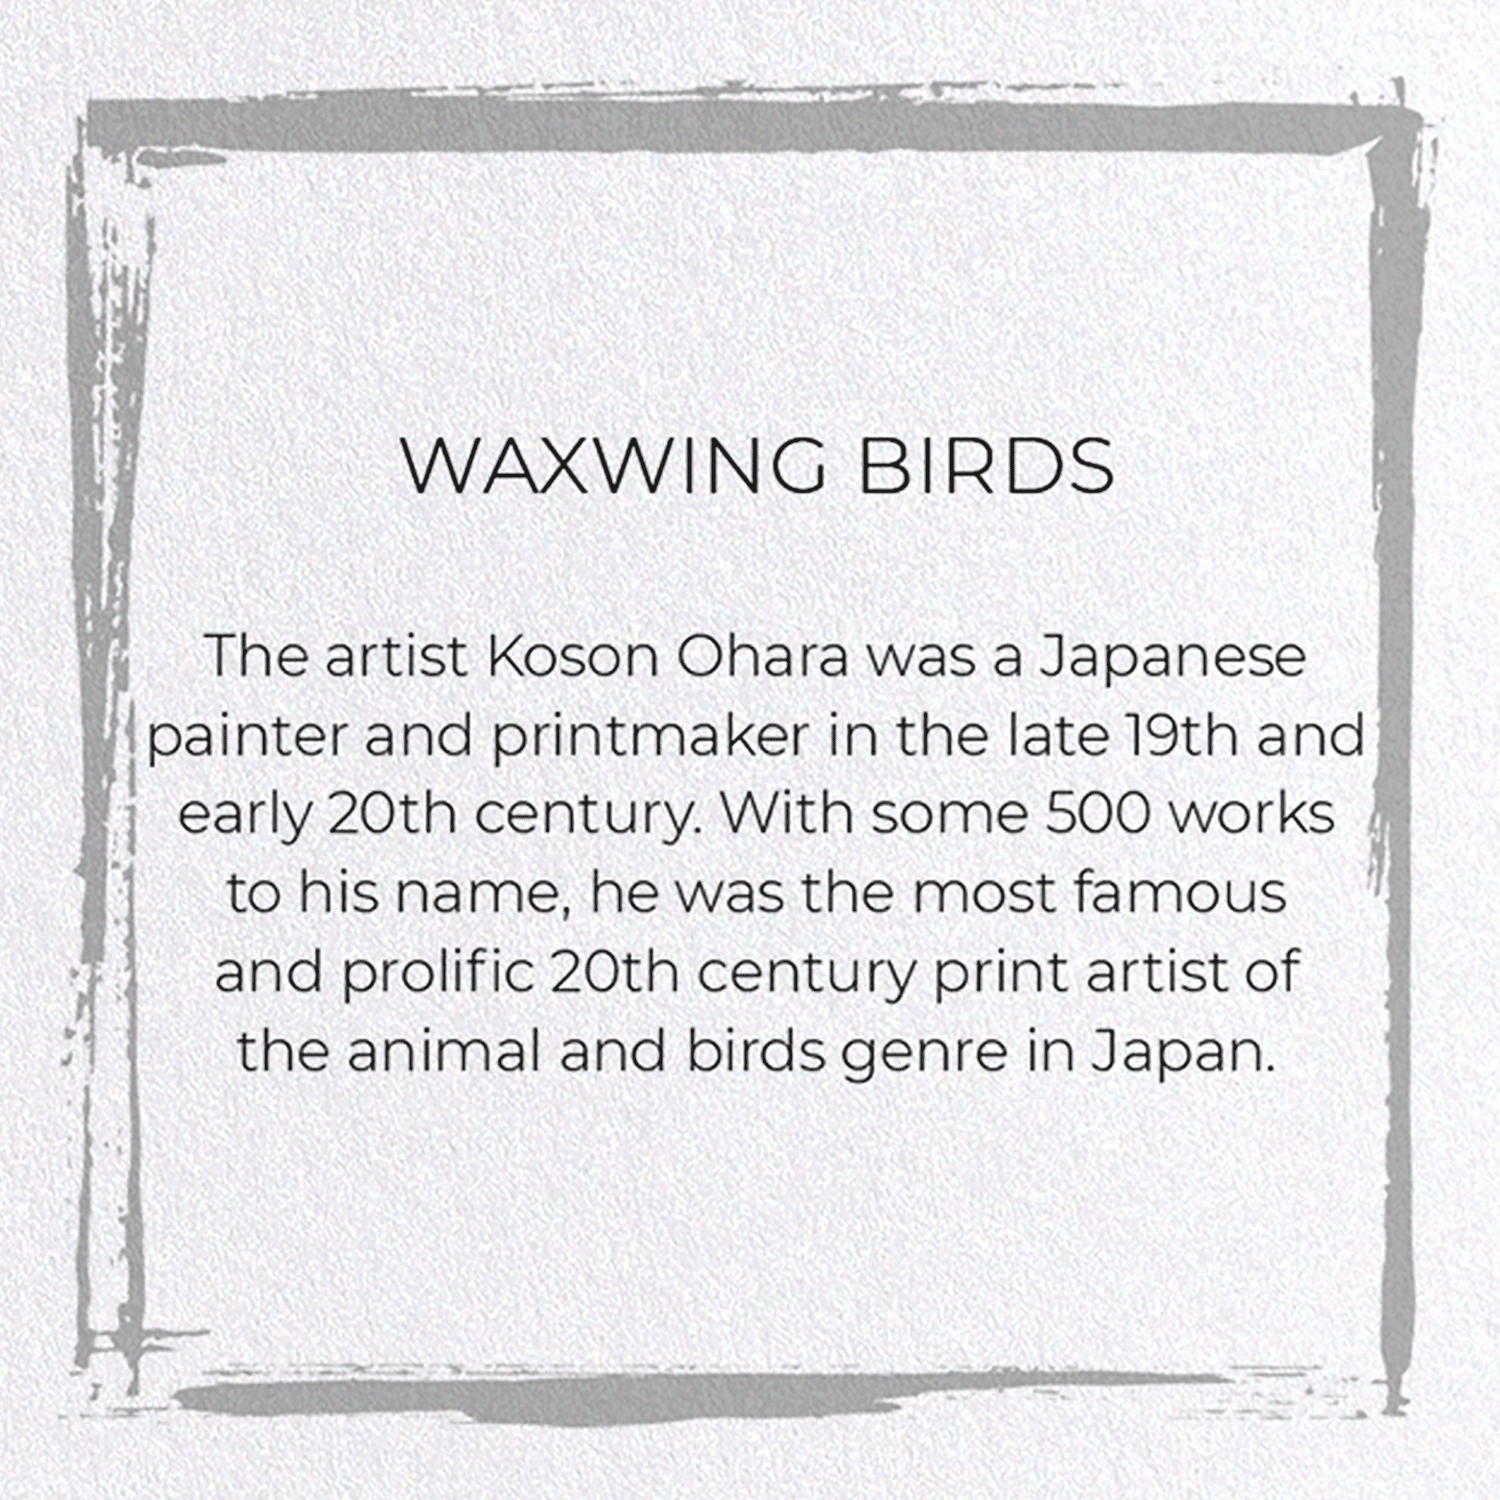 WAXWING BIRDS